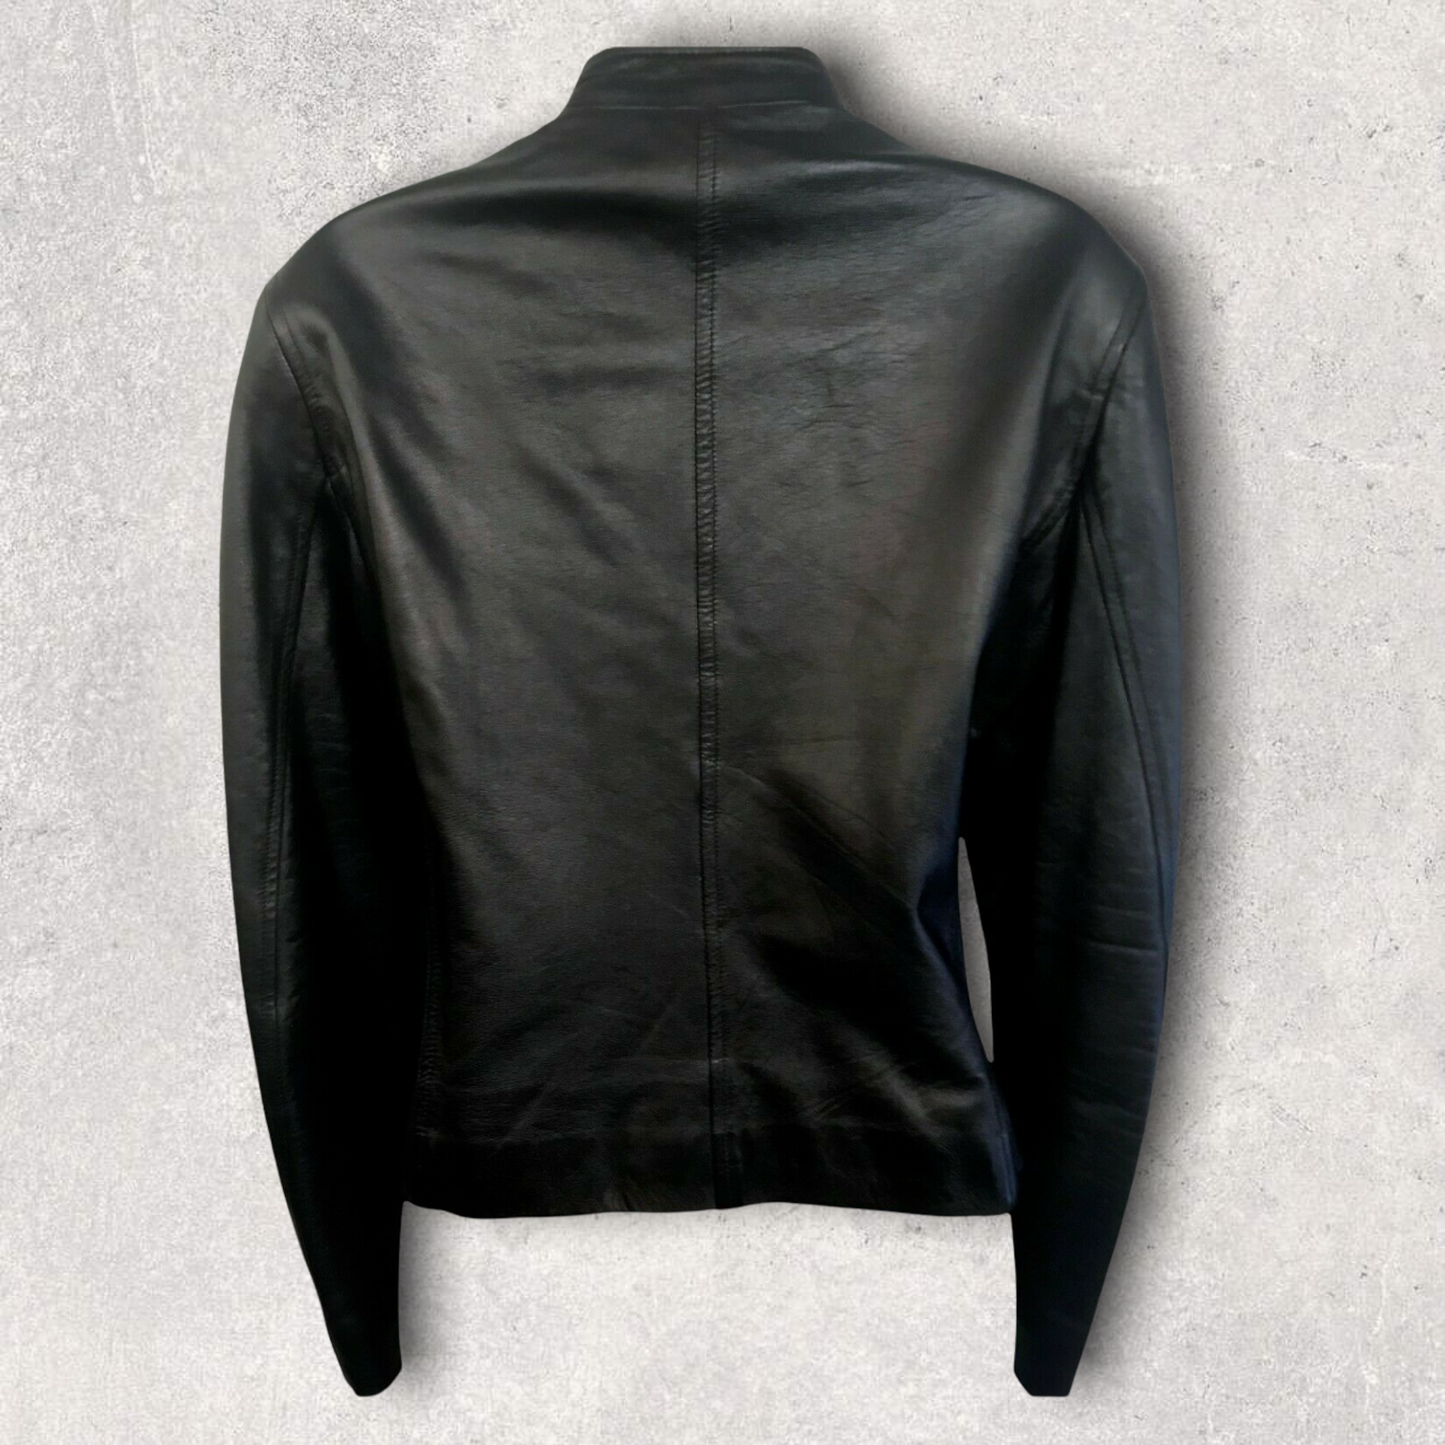 Cerruti 1881 Womens Vintage Black Leather Zip Jacket UK 12 US 8 EU 40 IT 44 Timeless Fashions